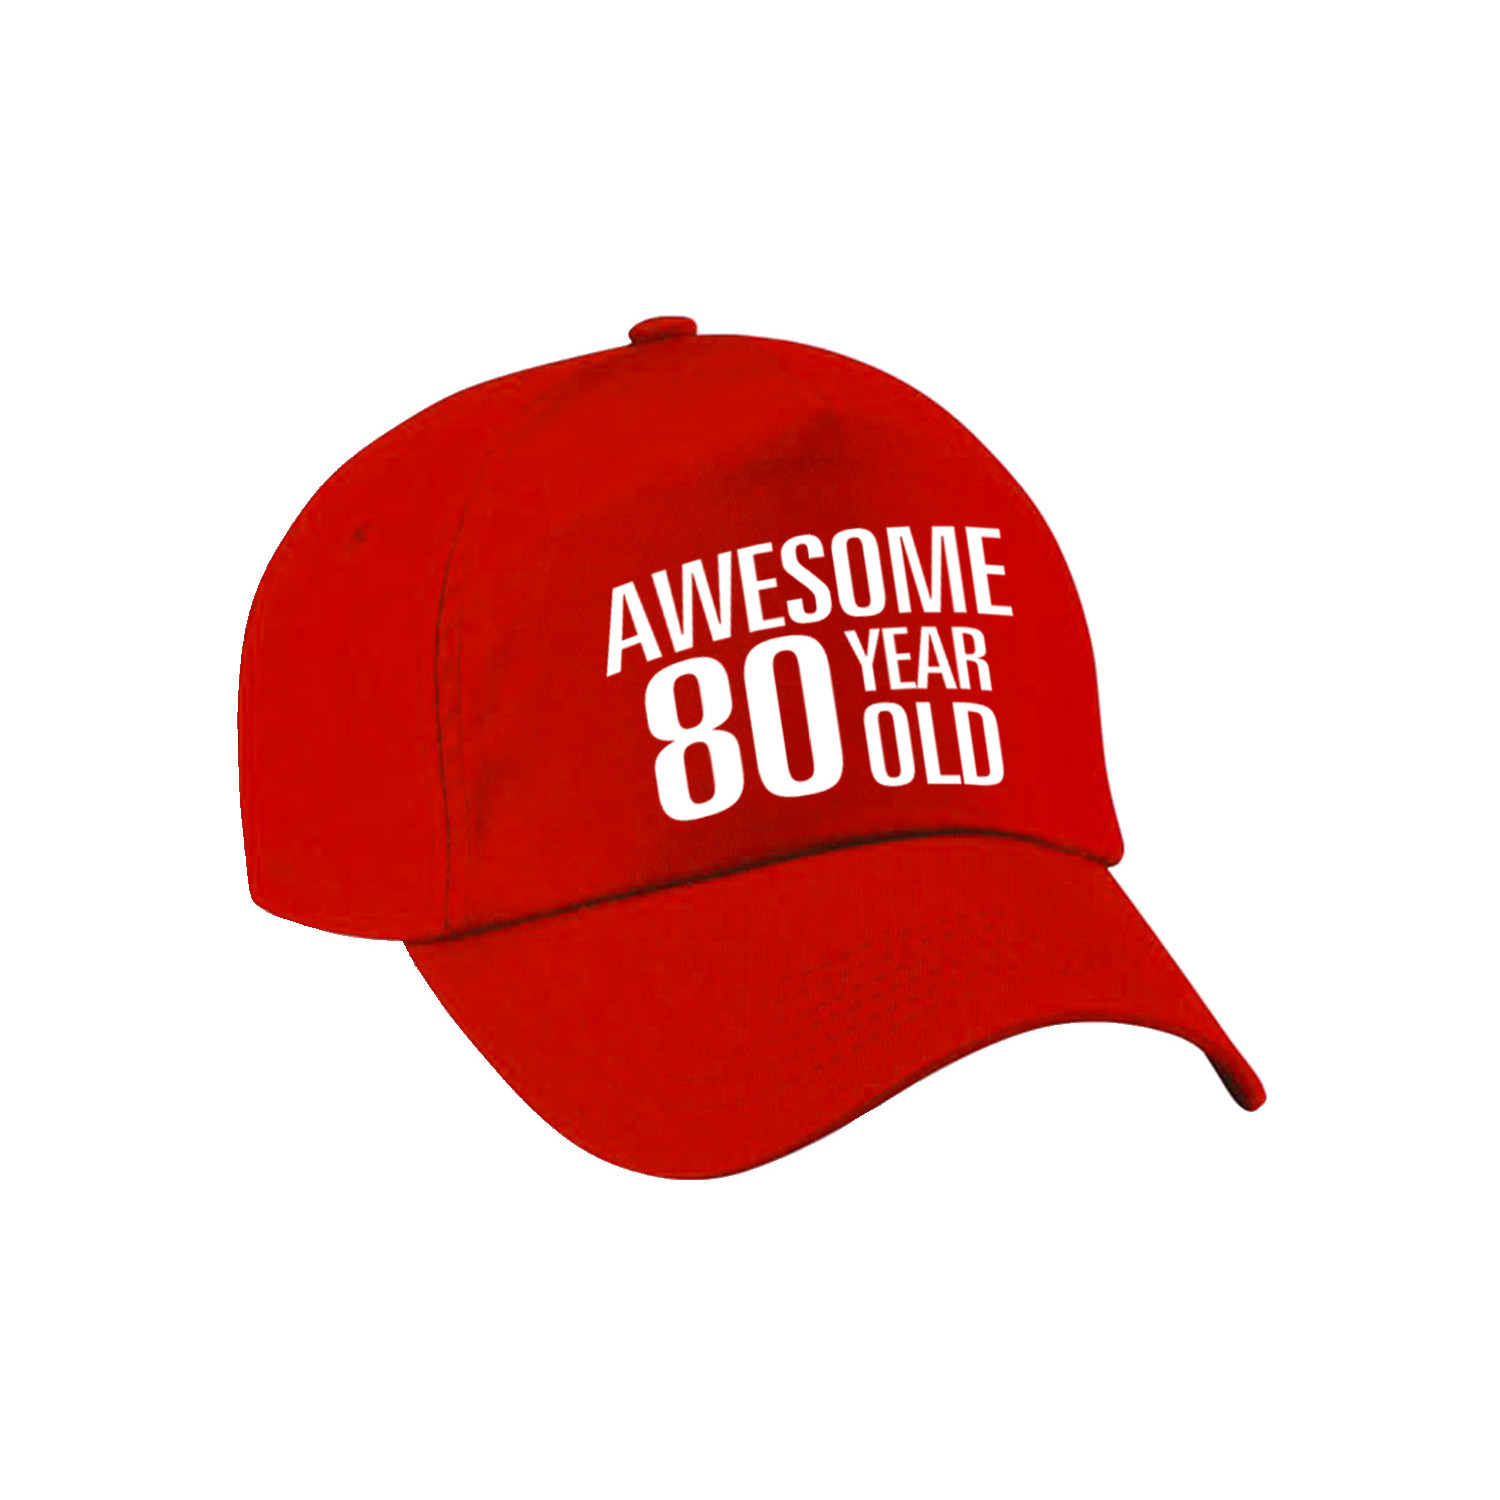 Awesome 80 year old verjaardag pet-cap rood voor dames en heren